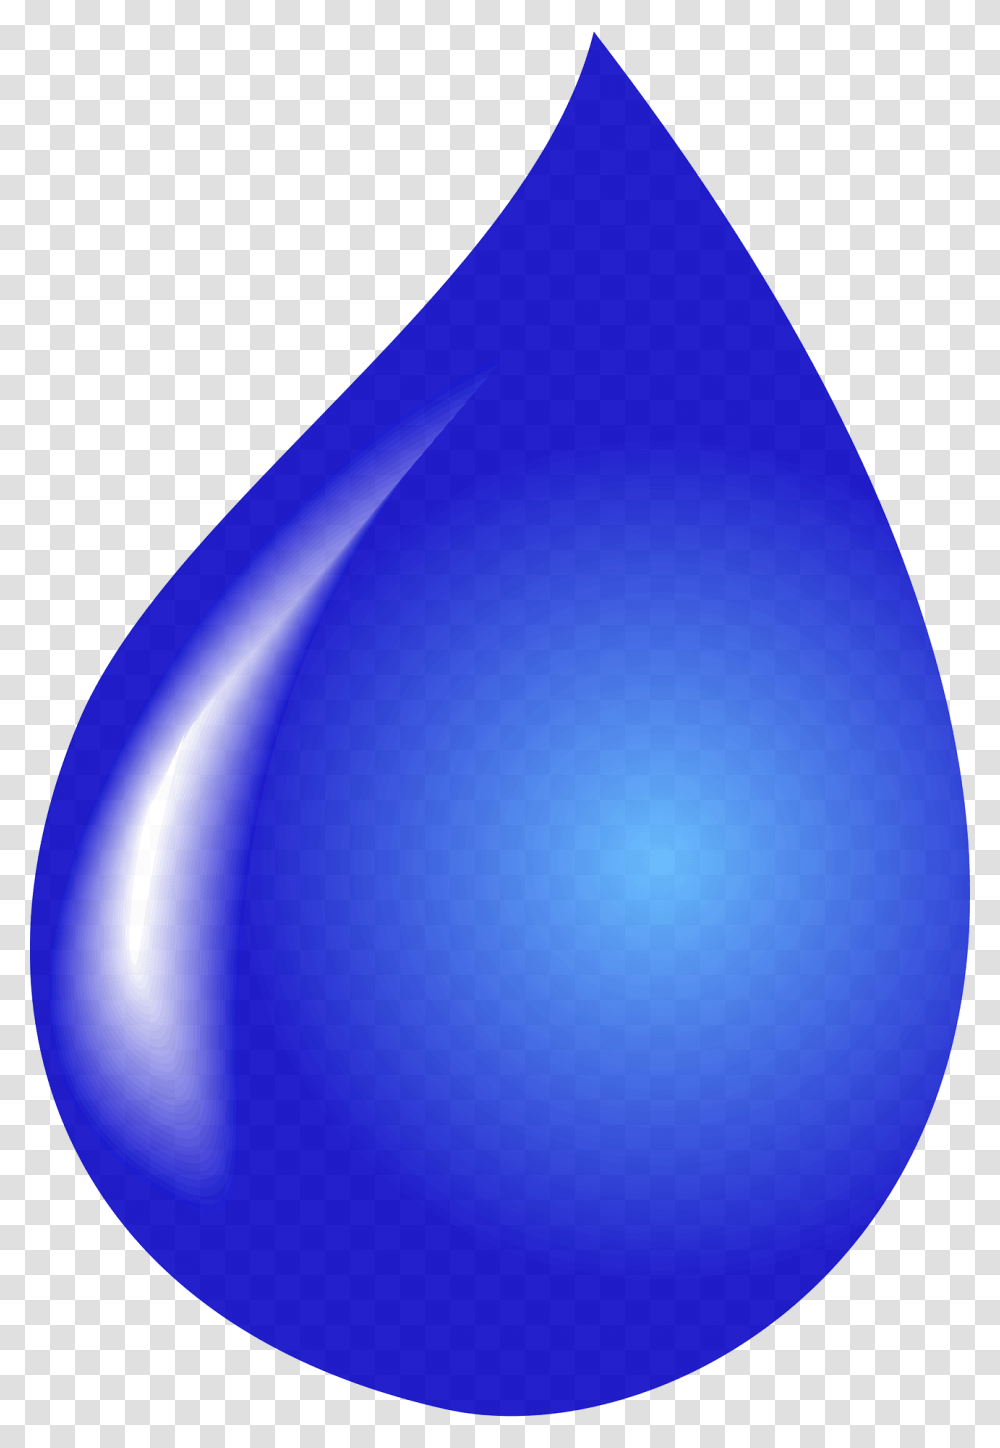 Drop Water Rain Tear Teardrop Liquid Raindrop 26402 Water Droplet Clip Art, Ball, Balloon, Lamp, Triangle Transparent Png